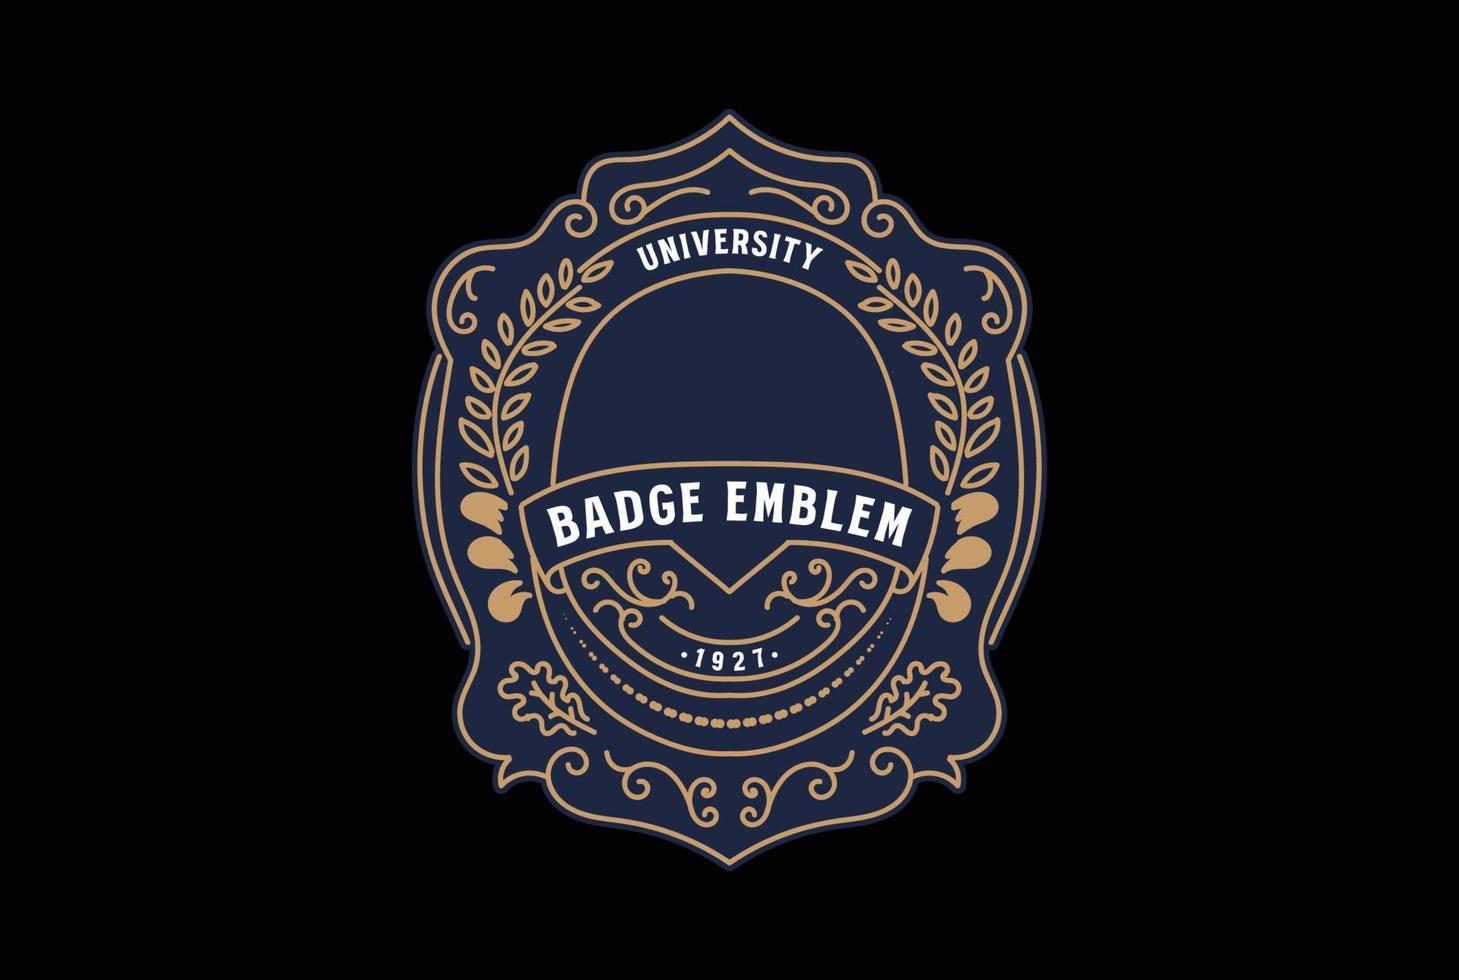 Vintage Retro University Campus Collage Education Badge Emblem Label Logo Design vector